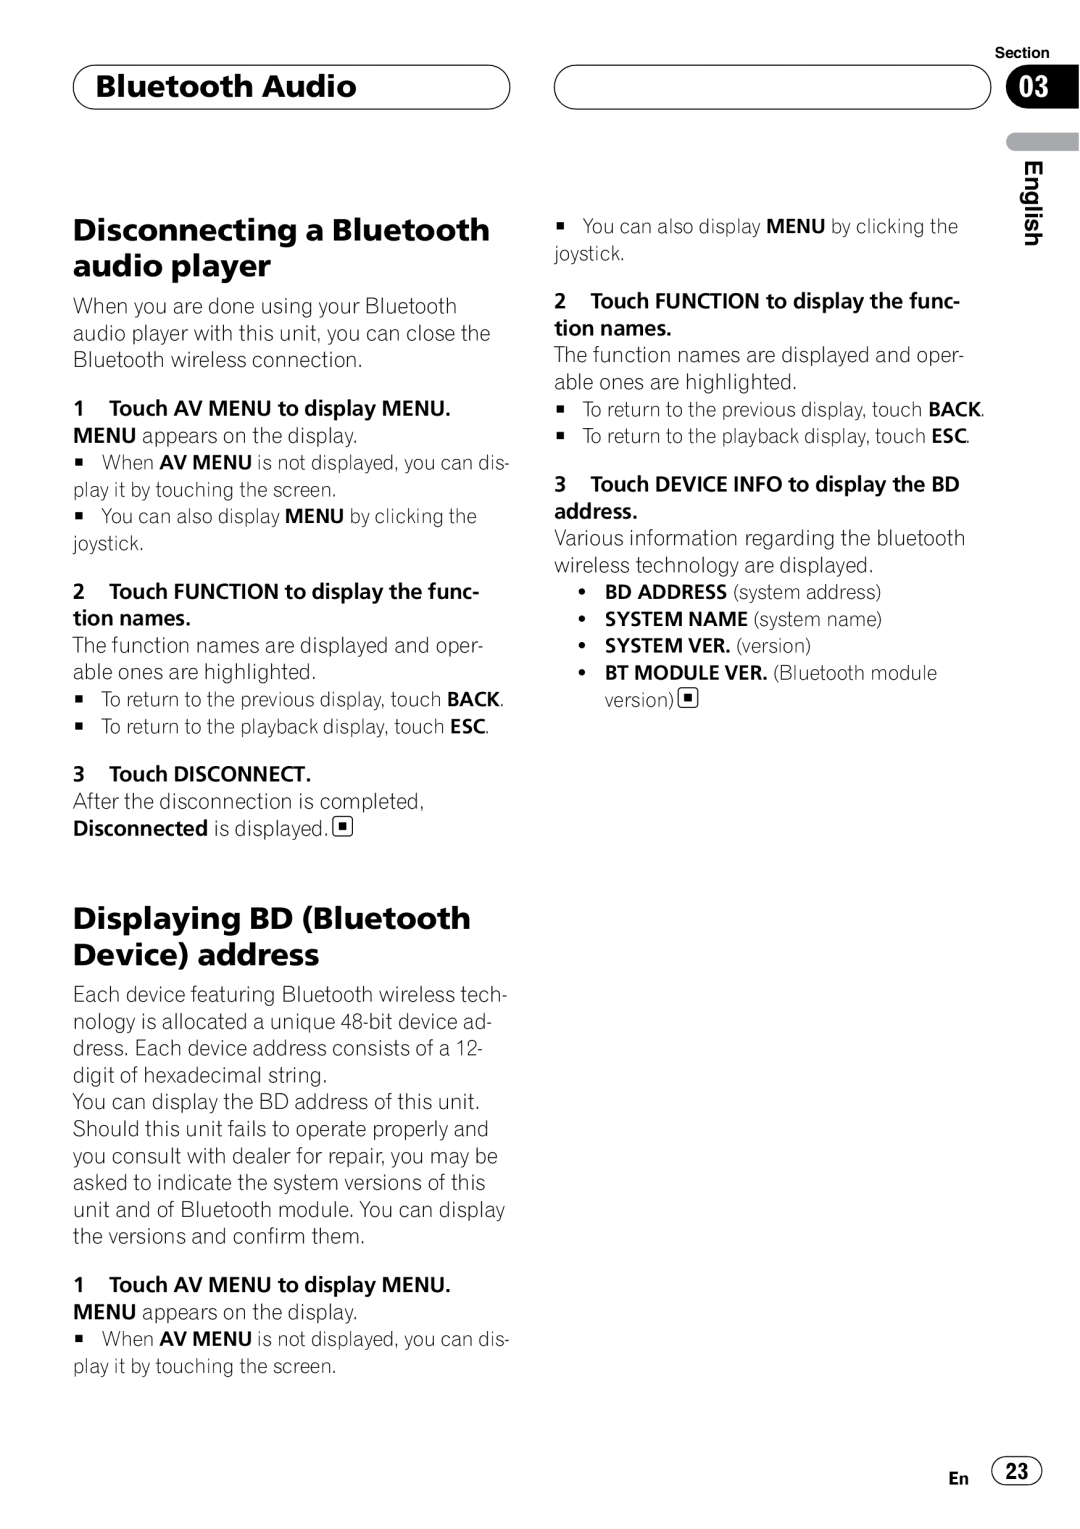 Pioneer CD-BTB200 Bluetooth Audio Disconnecting a Bluetooth audio player, Displaying BD Bluetooth Device address, English 